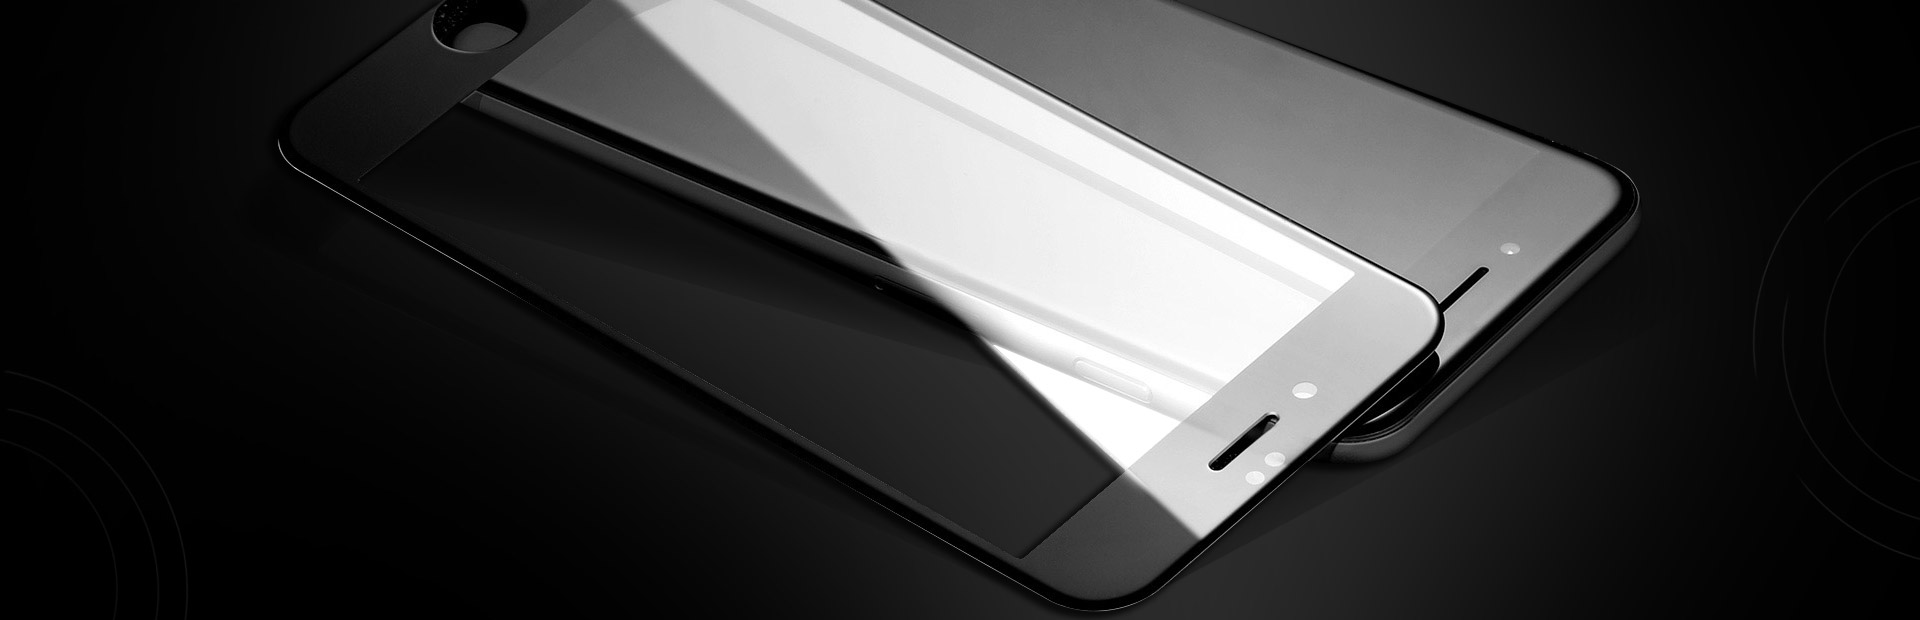 iphone6手机钢化膜,极致轻薄,纳米钢化玻璃防爆贴膜